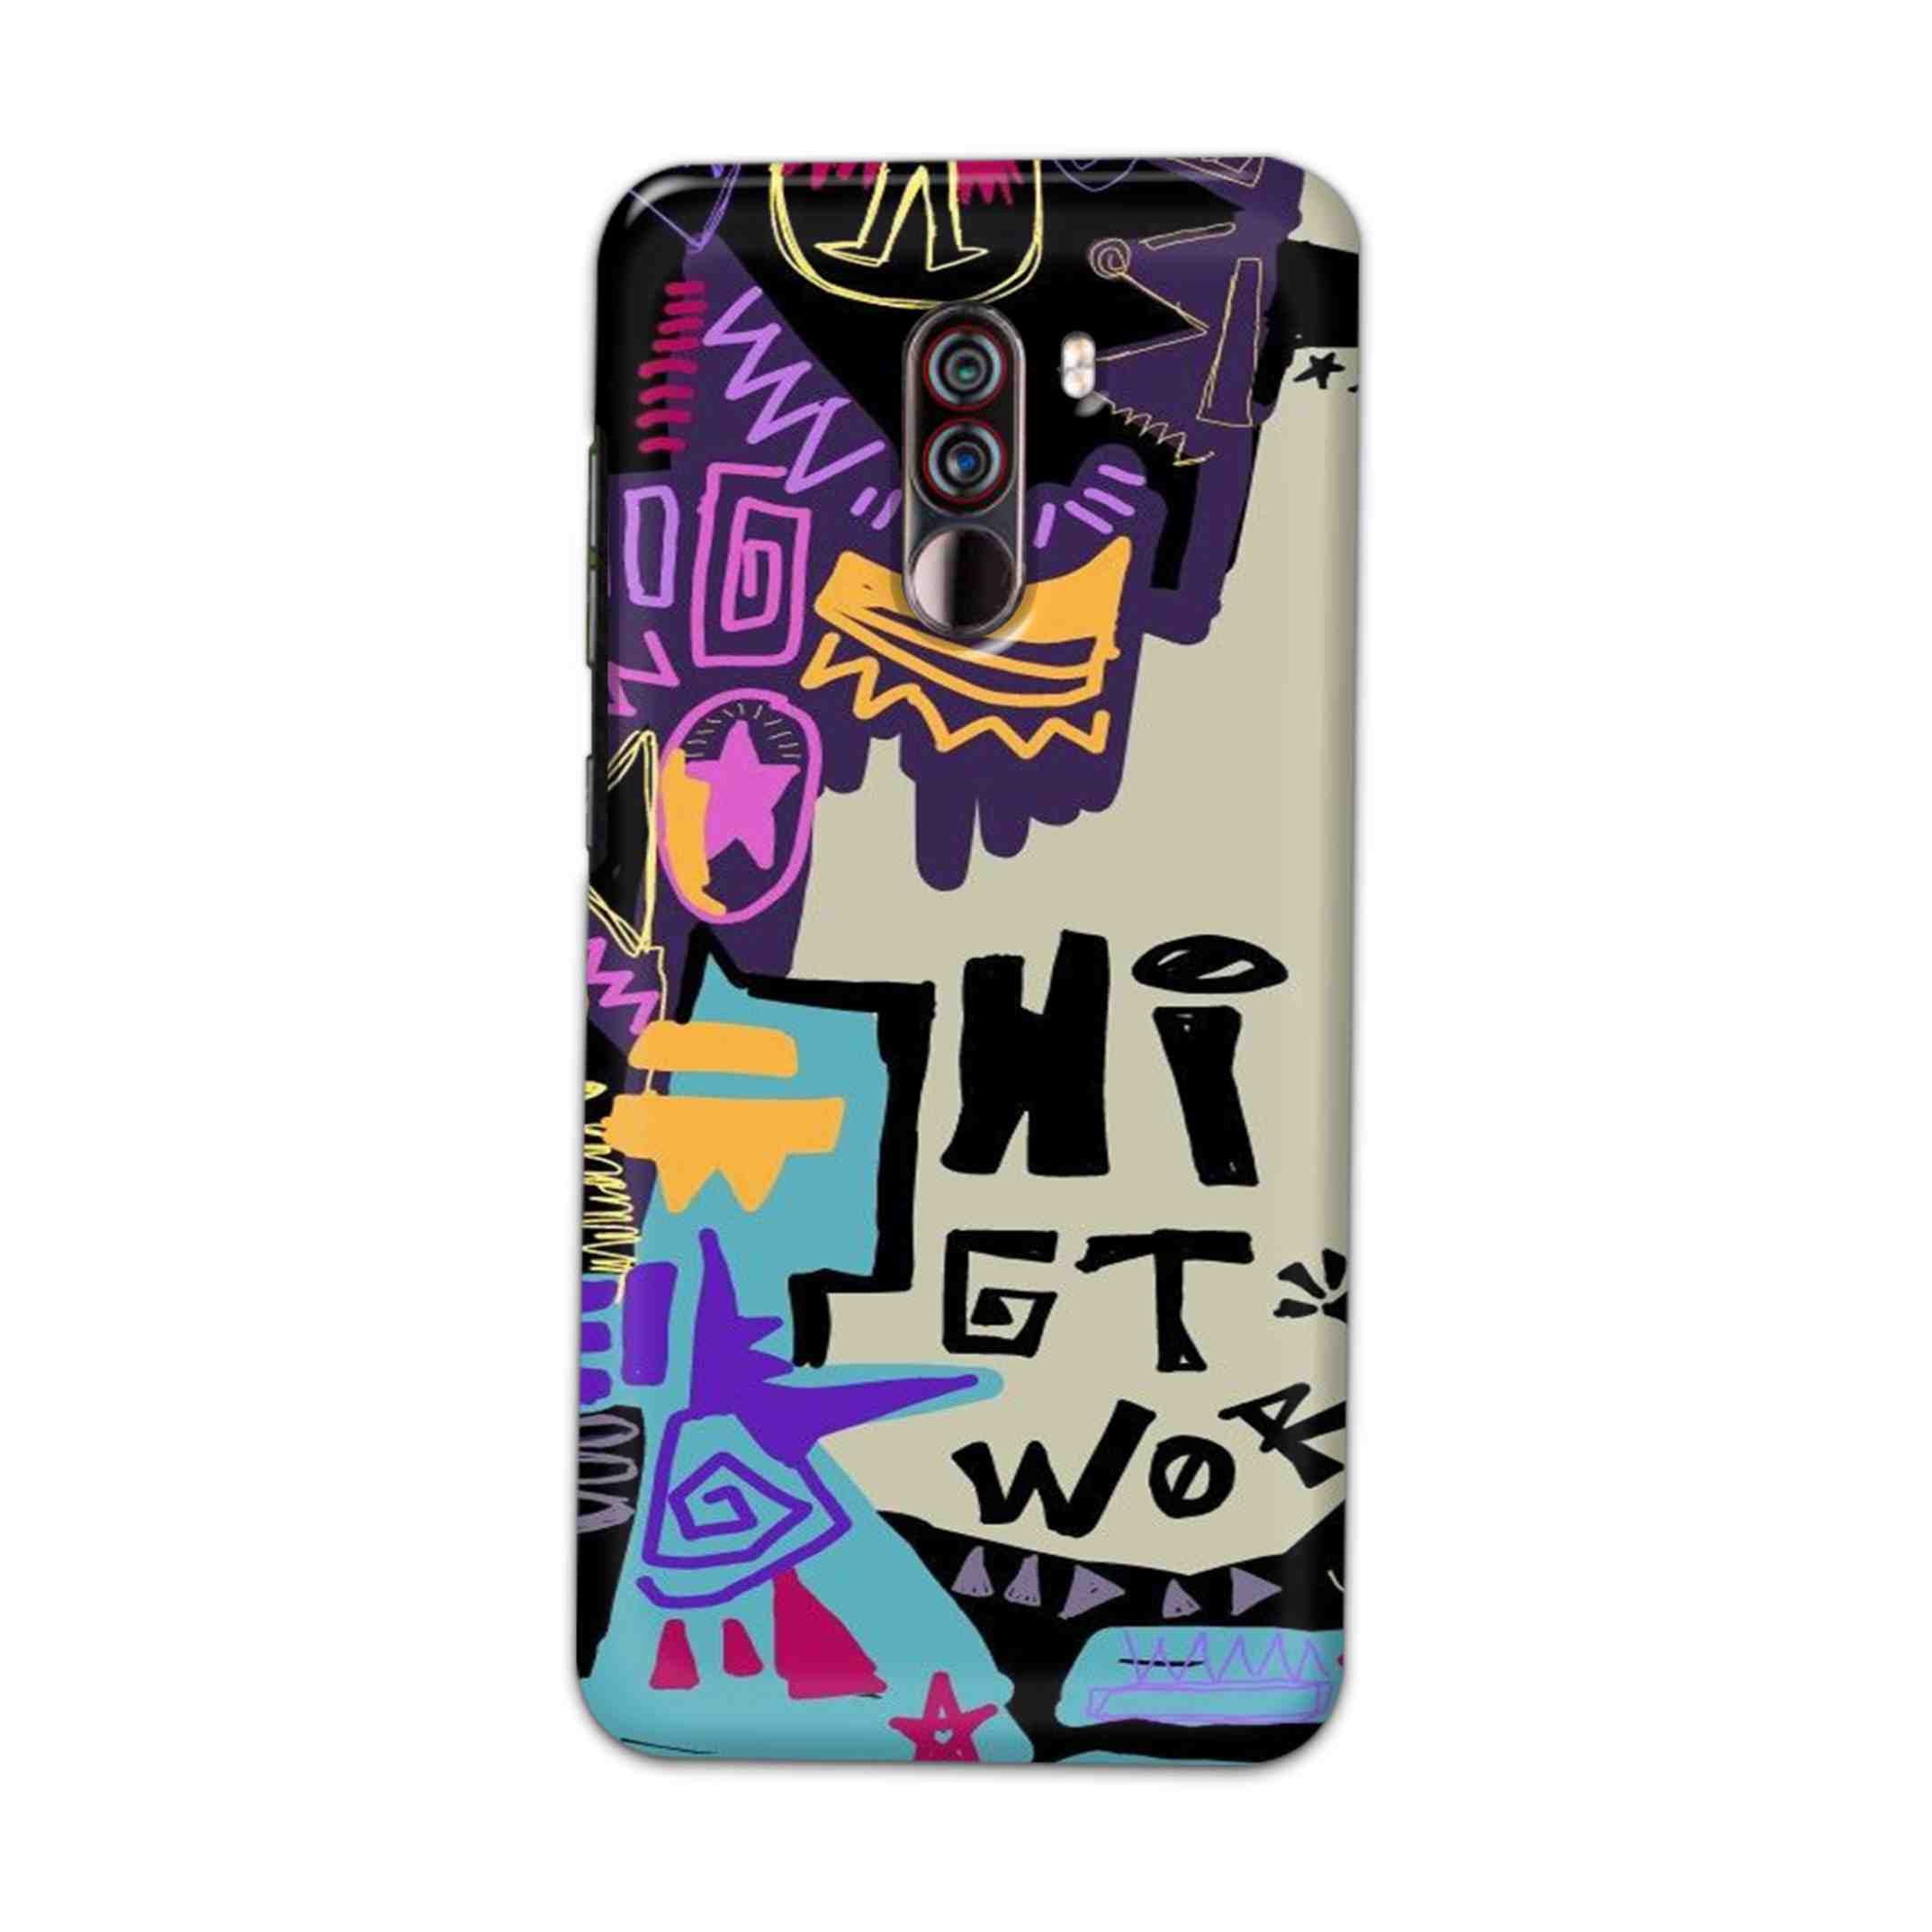 Buy Hi Gt World Hard Back Mobile Phone Case Cover For Xiaomi Pocophone F1 Online